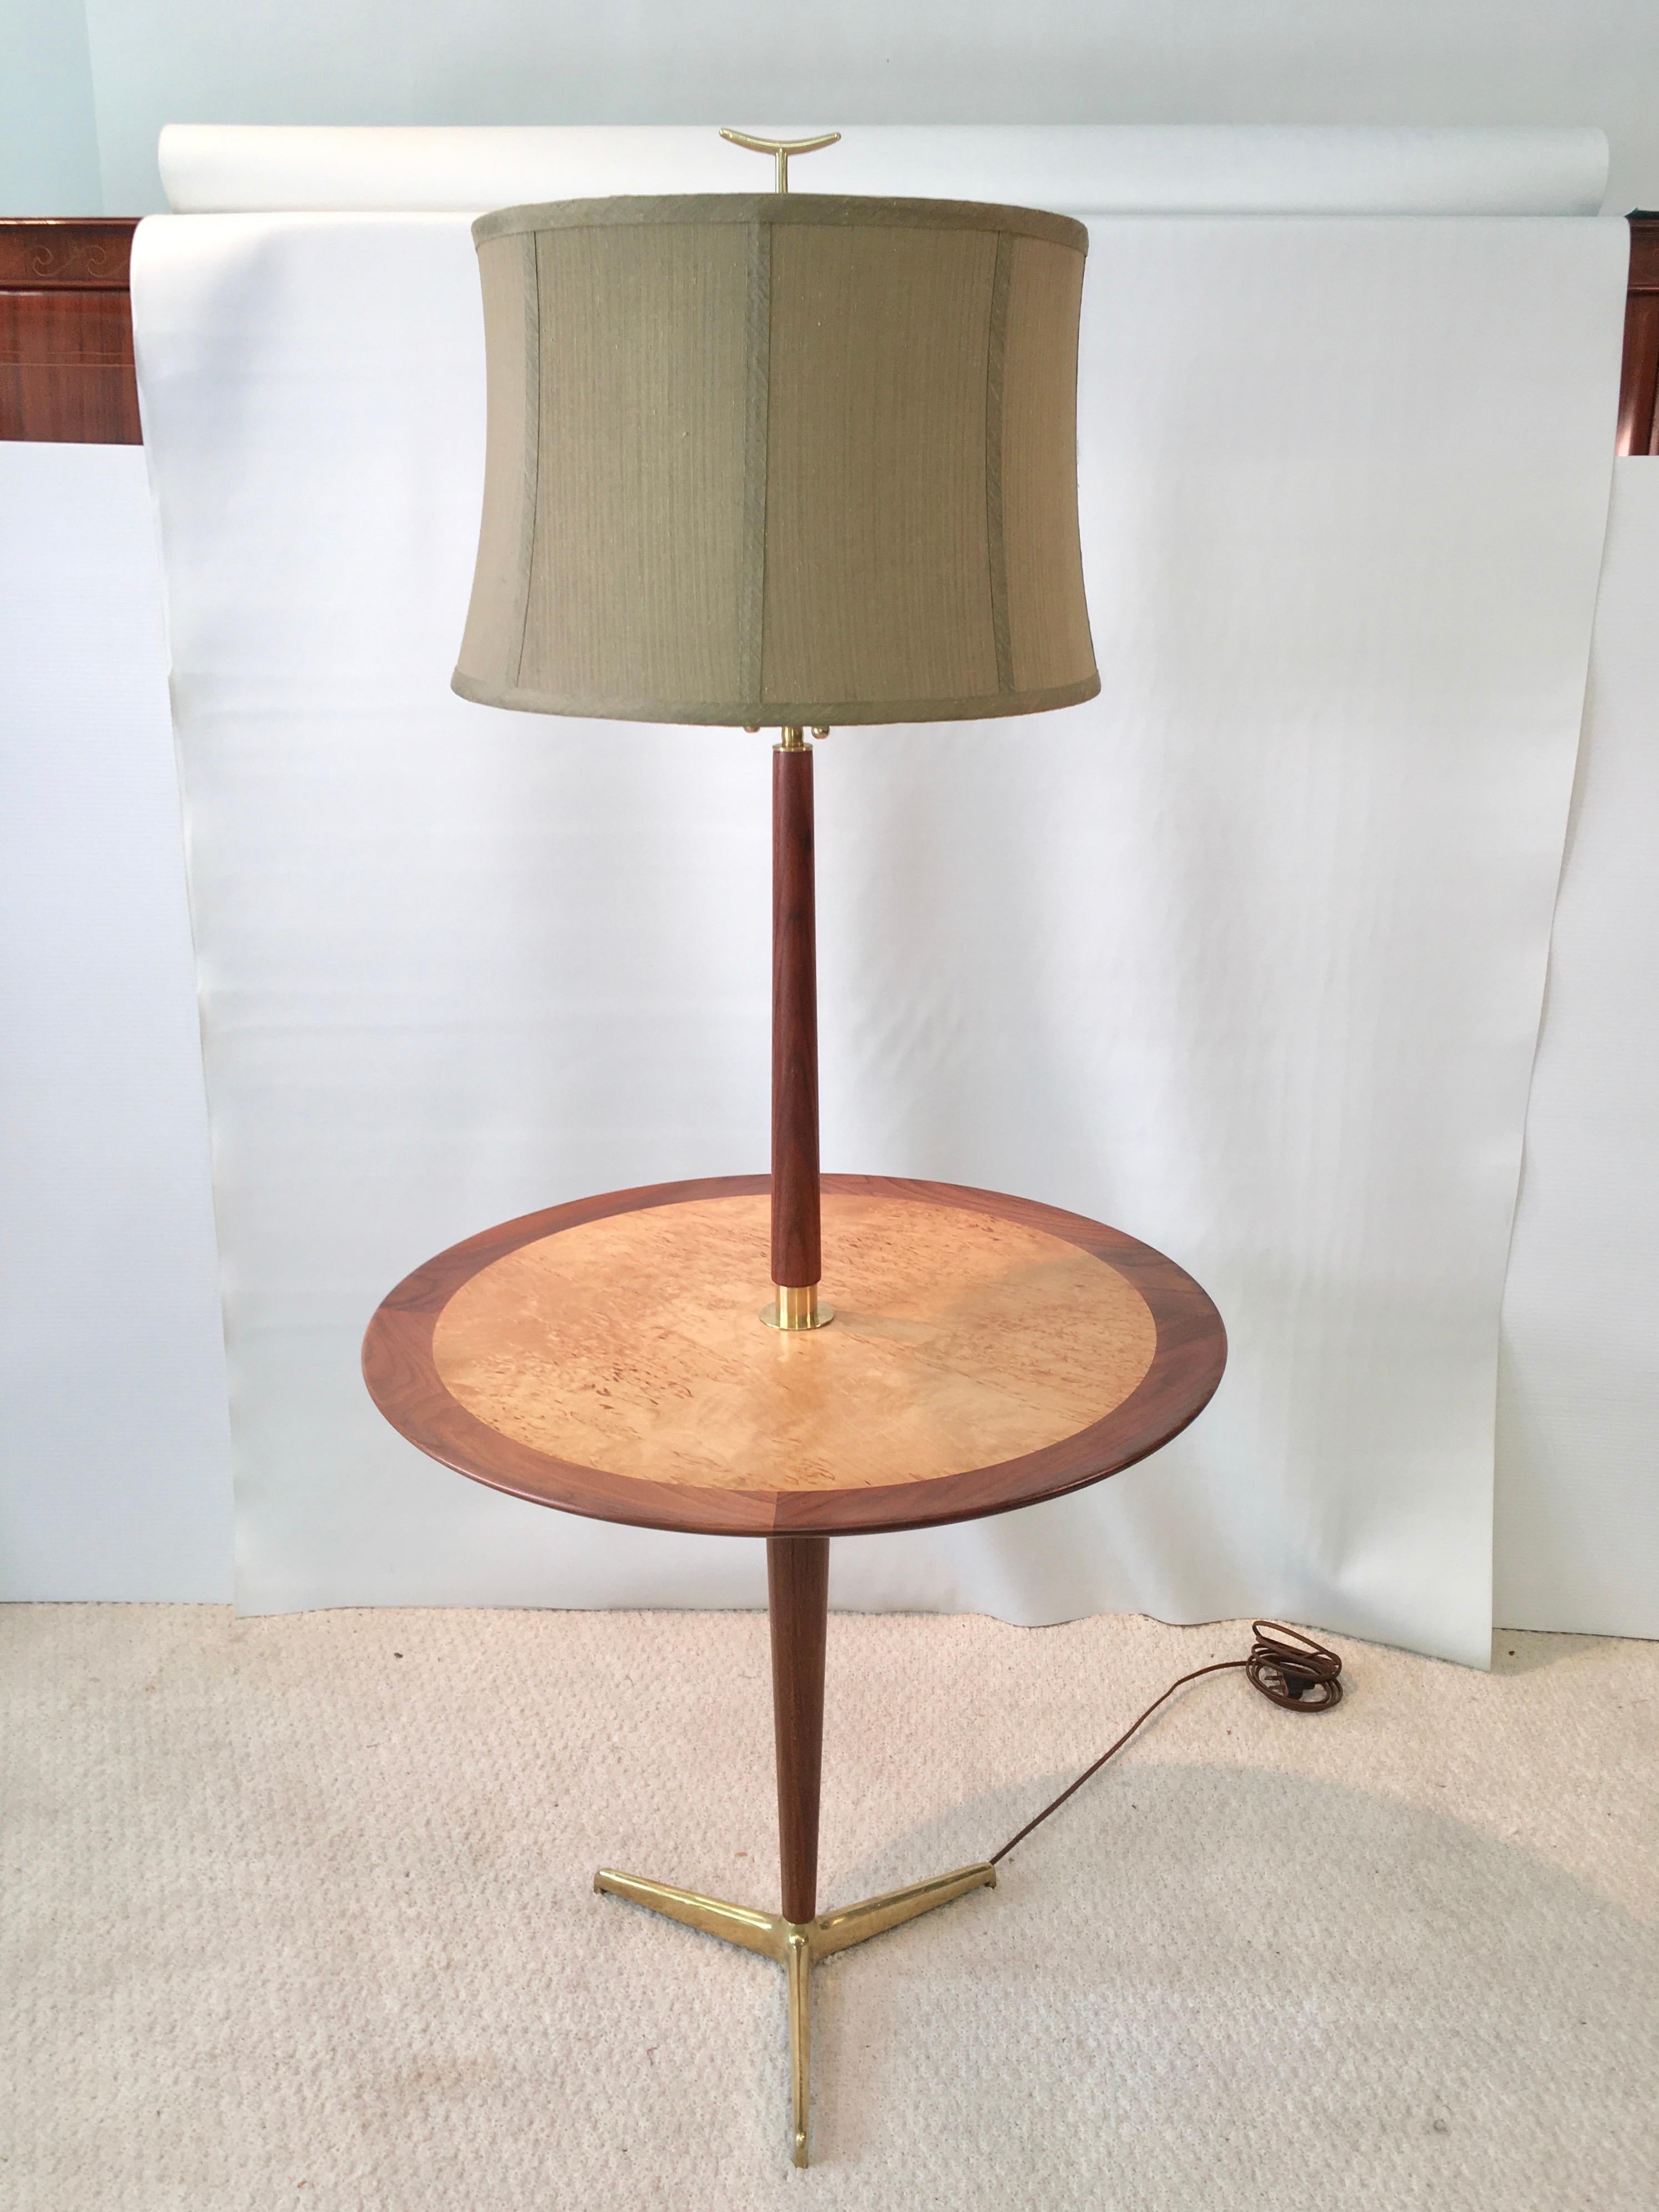 Rare Dunbar floor lamp/snack table combo, Model 4856, designed by Edward Wormley circa 1948. Original Dunbar tag on underside. Slender tapered walnut leg and lamp stem. Round top, 25